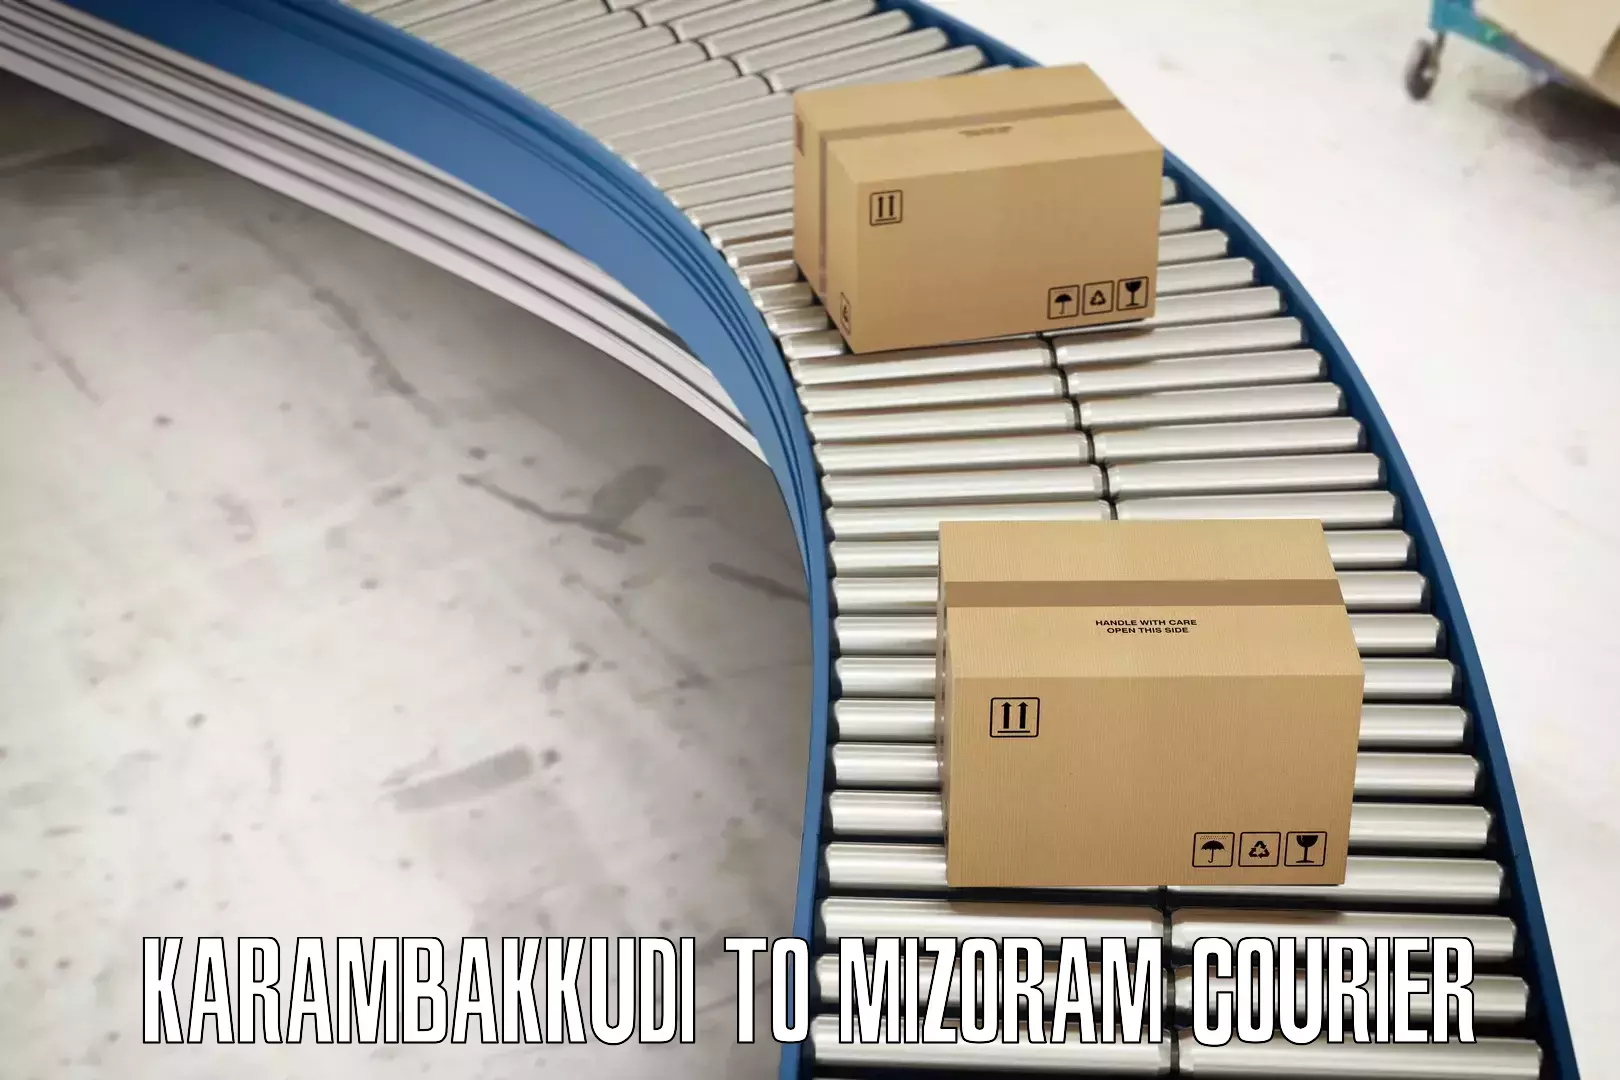 On-demand delivery Karambakkudi to Kolasib